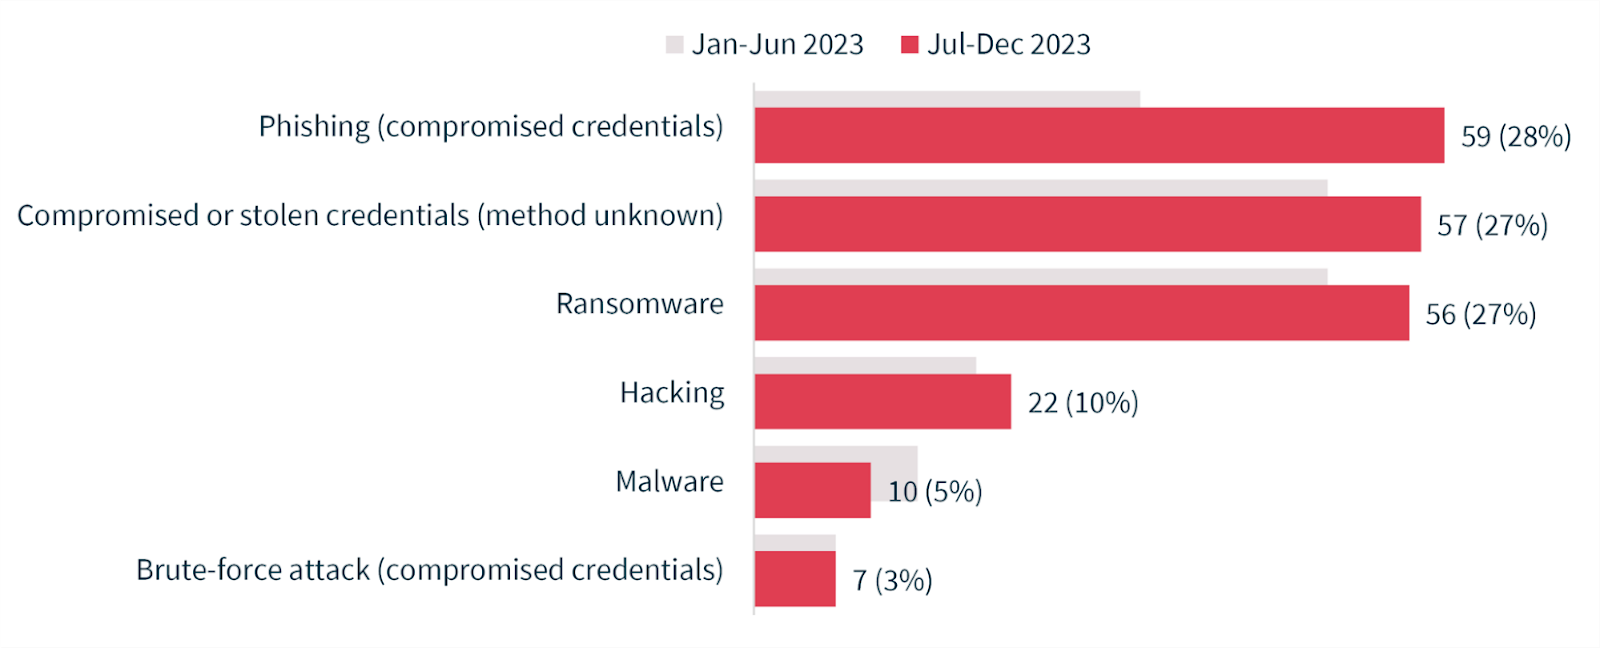 Cyber incident breakdown - July to December 2023